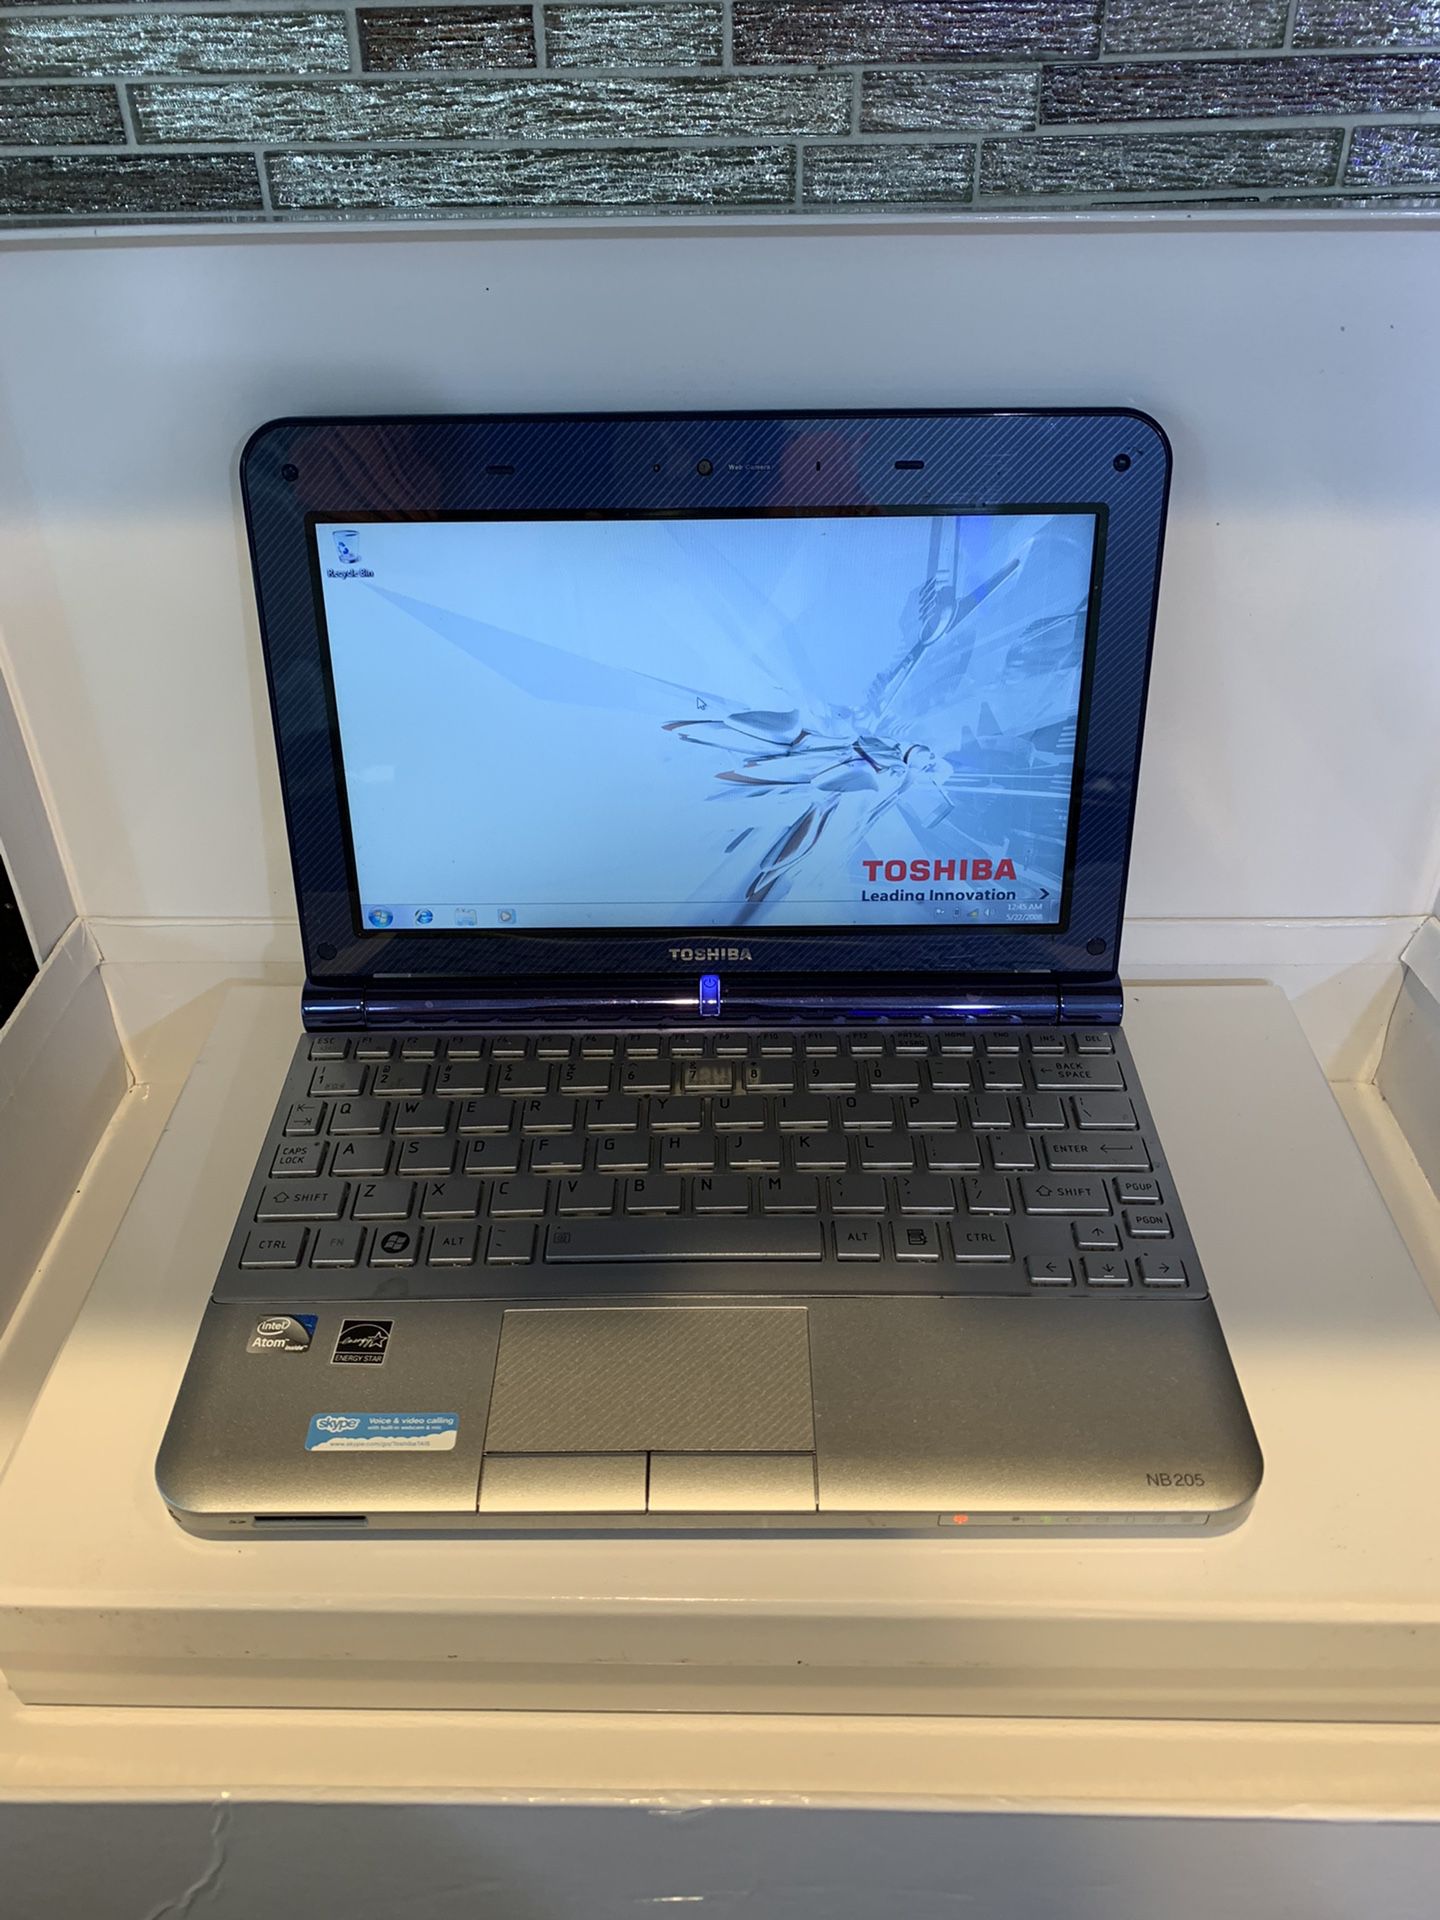 10” Toshiba NB205 Mini Laptop with Webcam, Windows 7, Microsoft Office